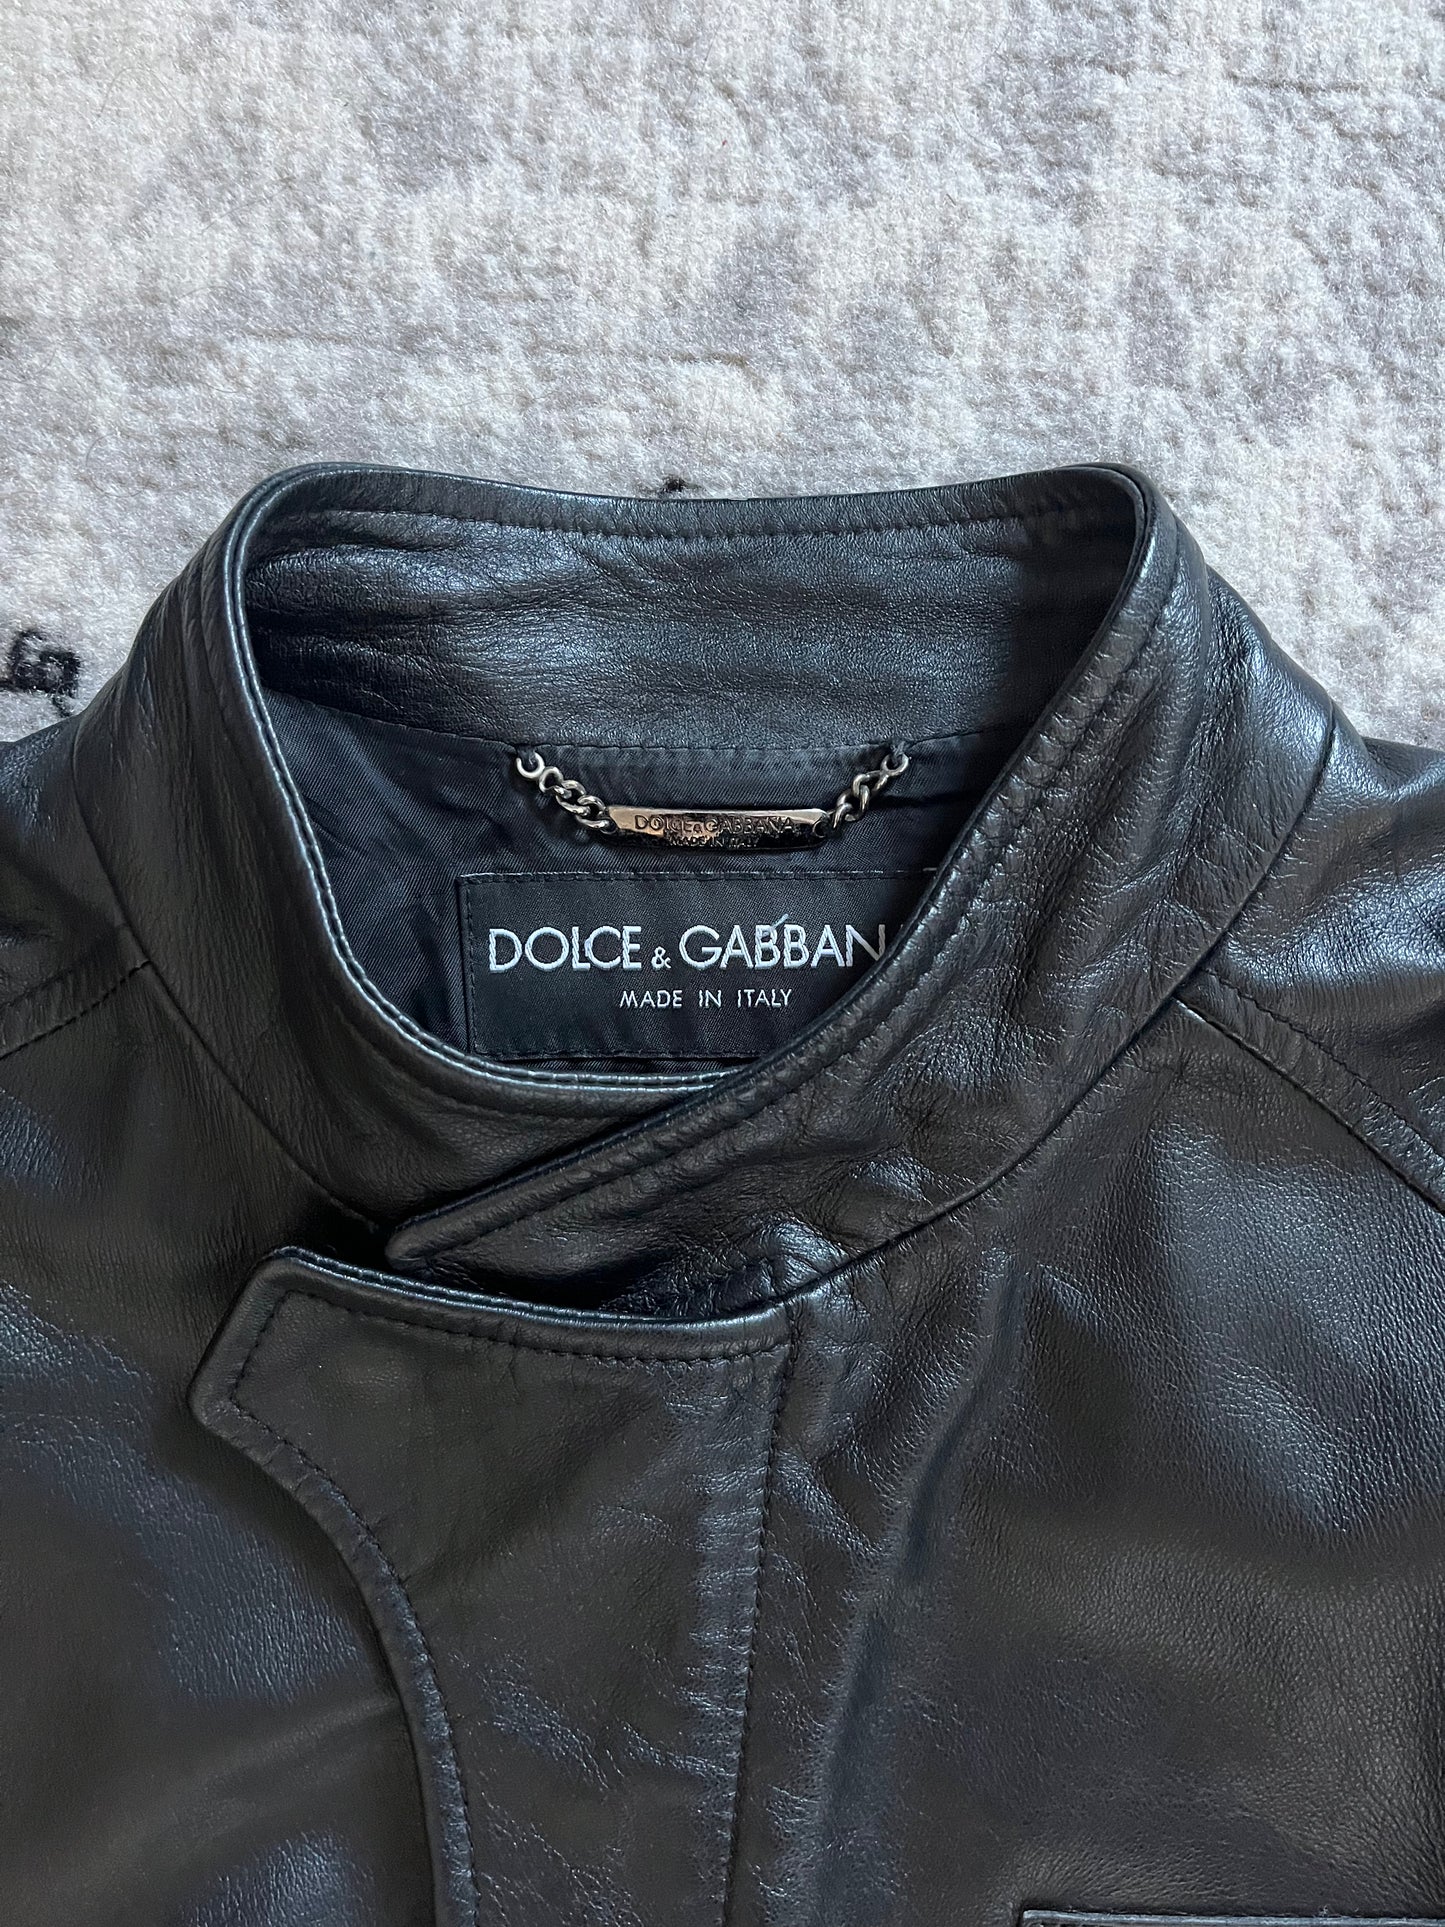 AW2010 Dolce & Gabbana Black Biker Leather Jacket (M/L)